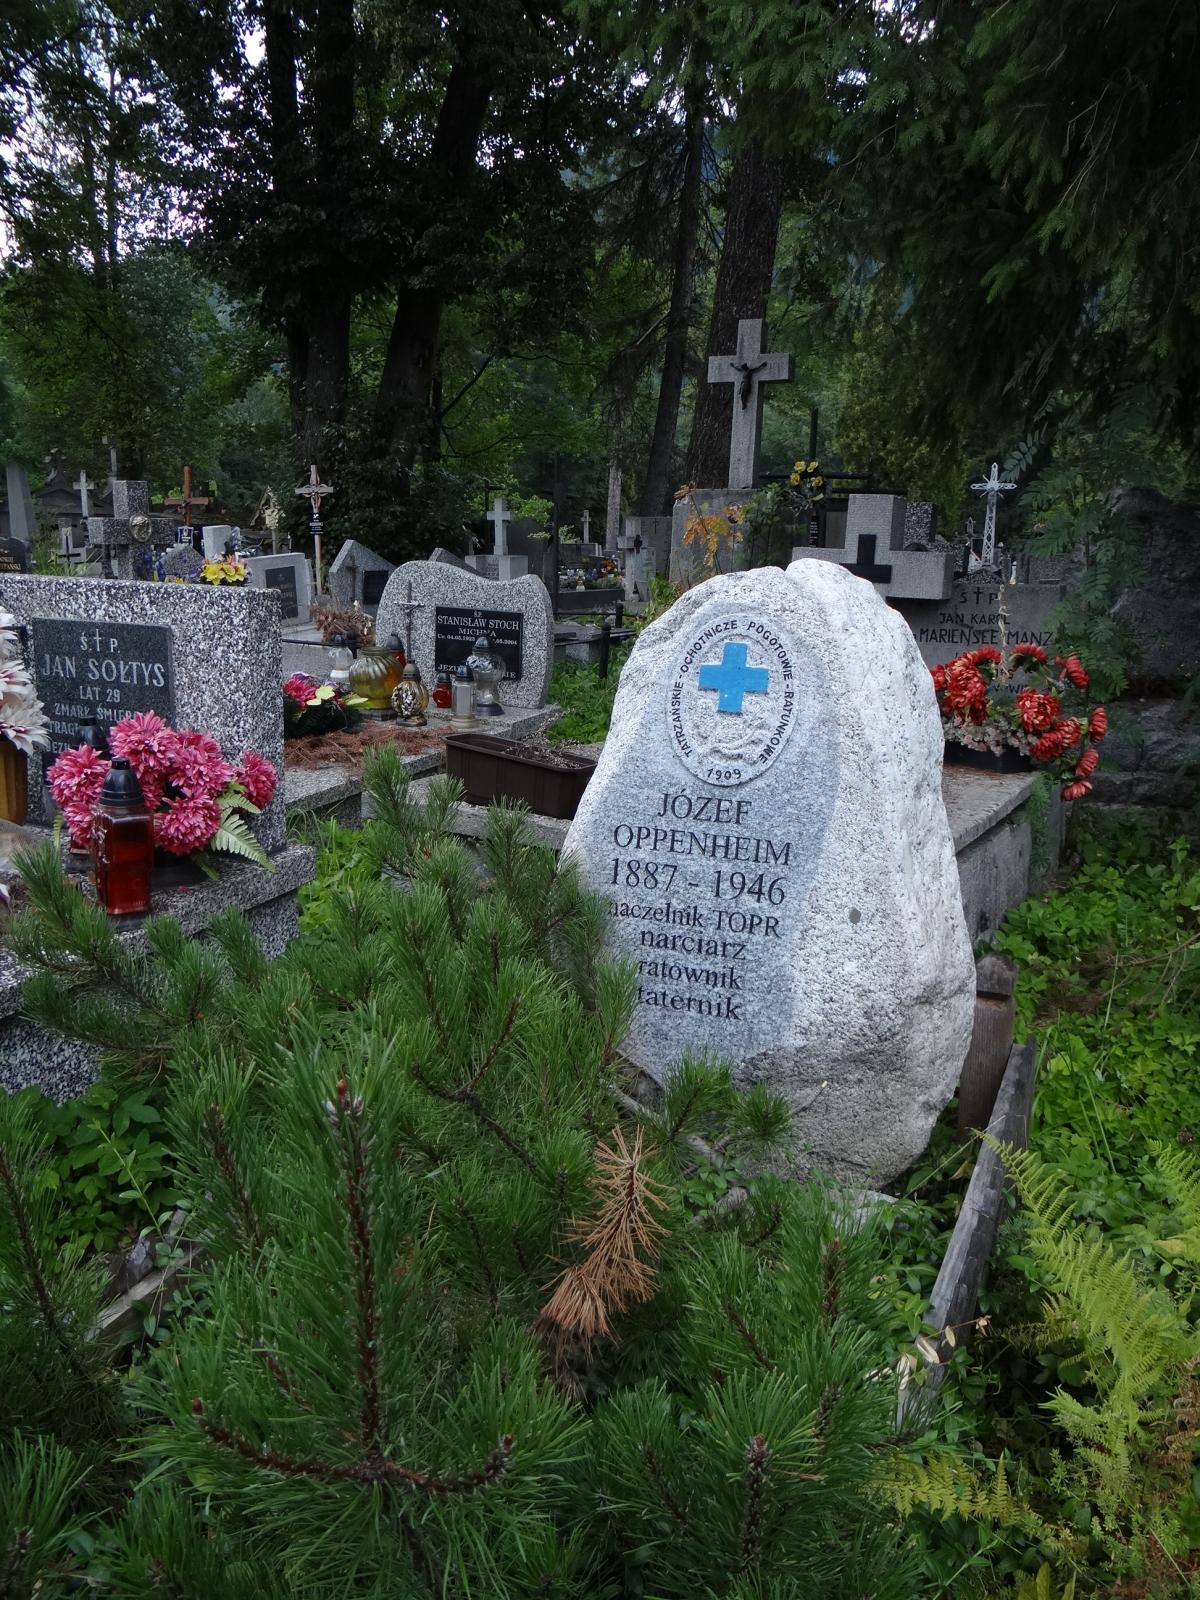 Wikipedia, Józef Oppenheim, New Cemetery in Zakopane, Self-published work